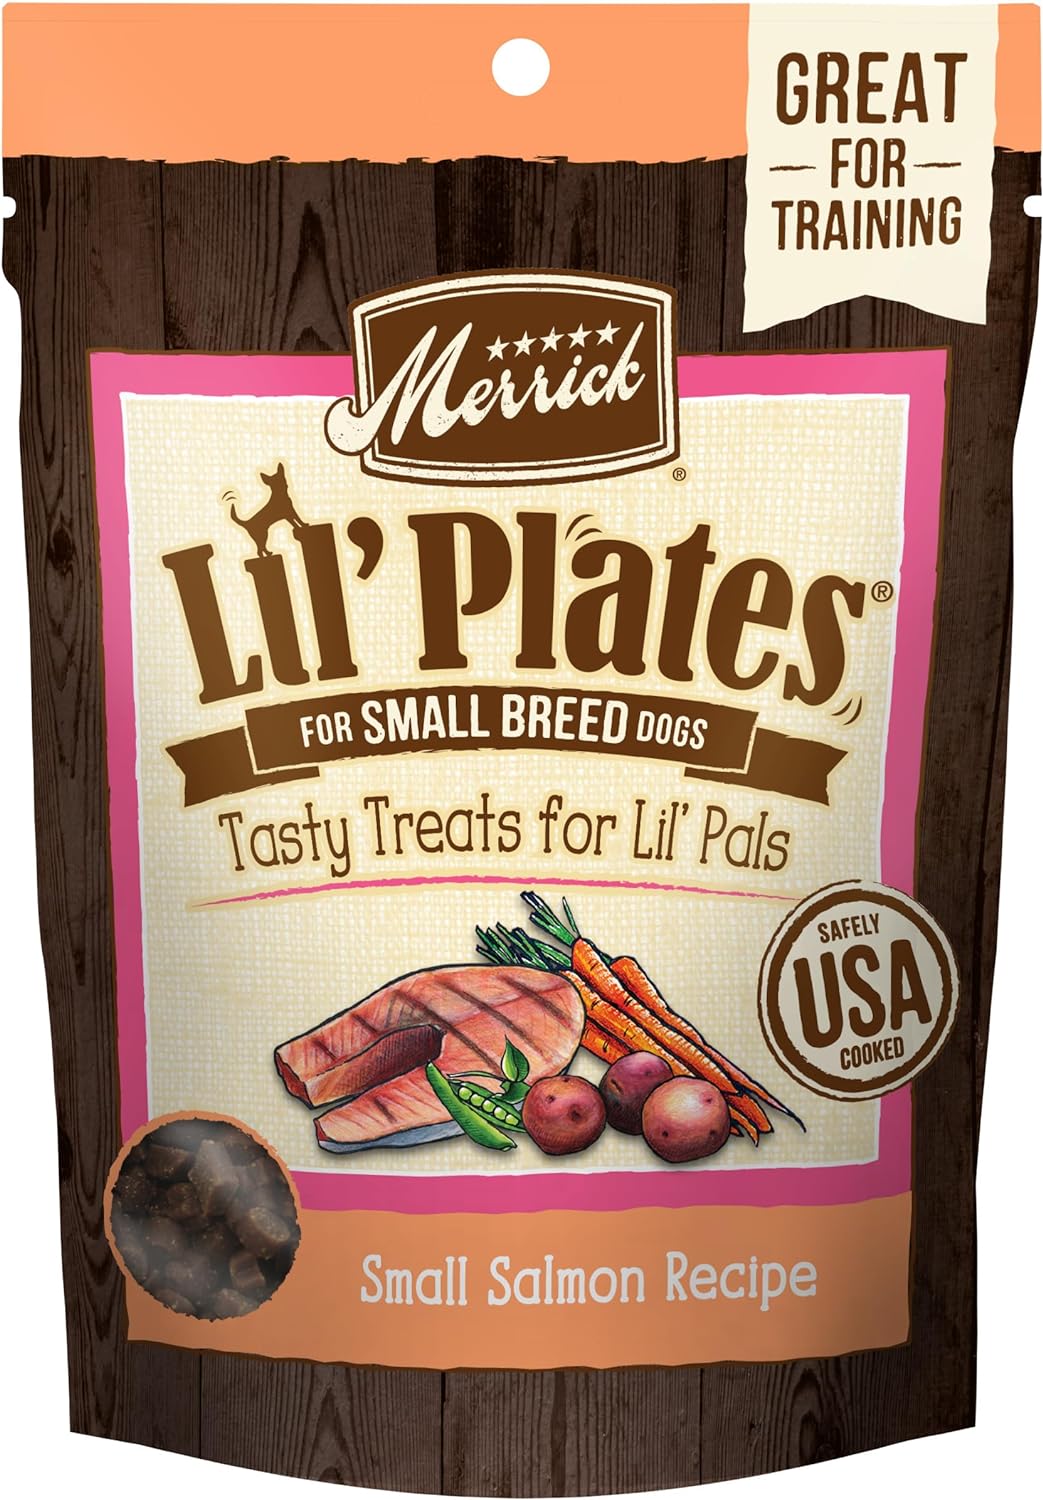 Merrick Lil’ Plates Grain Free Small Dog Treats, Natural Training Treats For Small Dogs, Small Salmon Recipe - 5 oz. Pouch